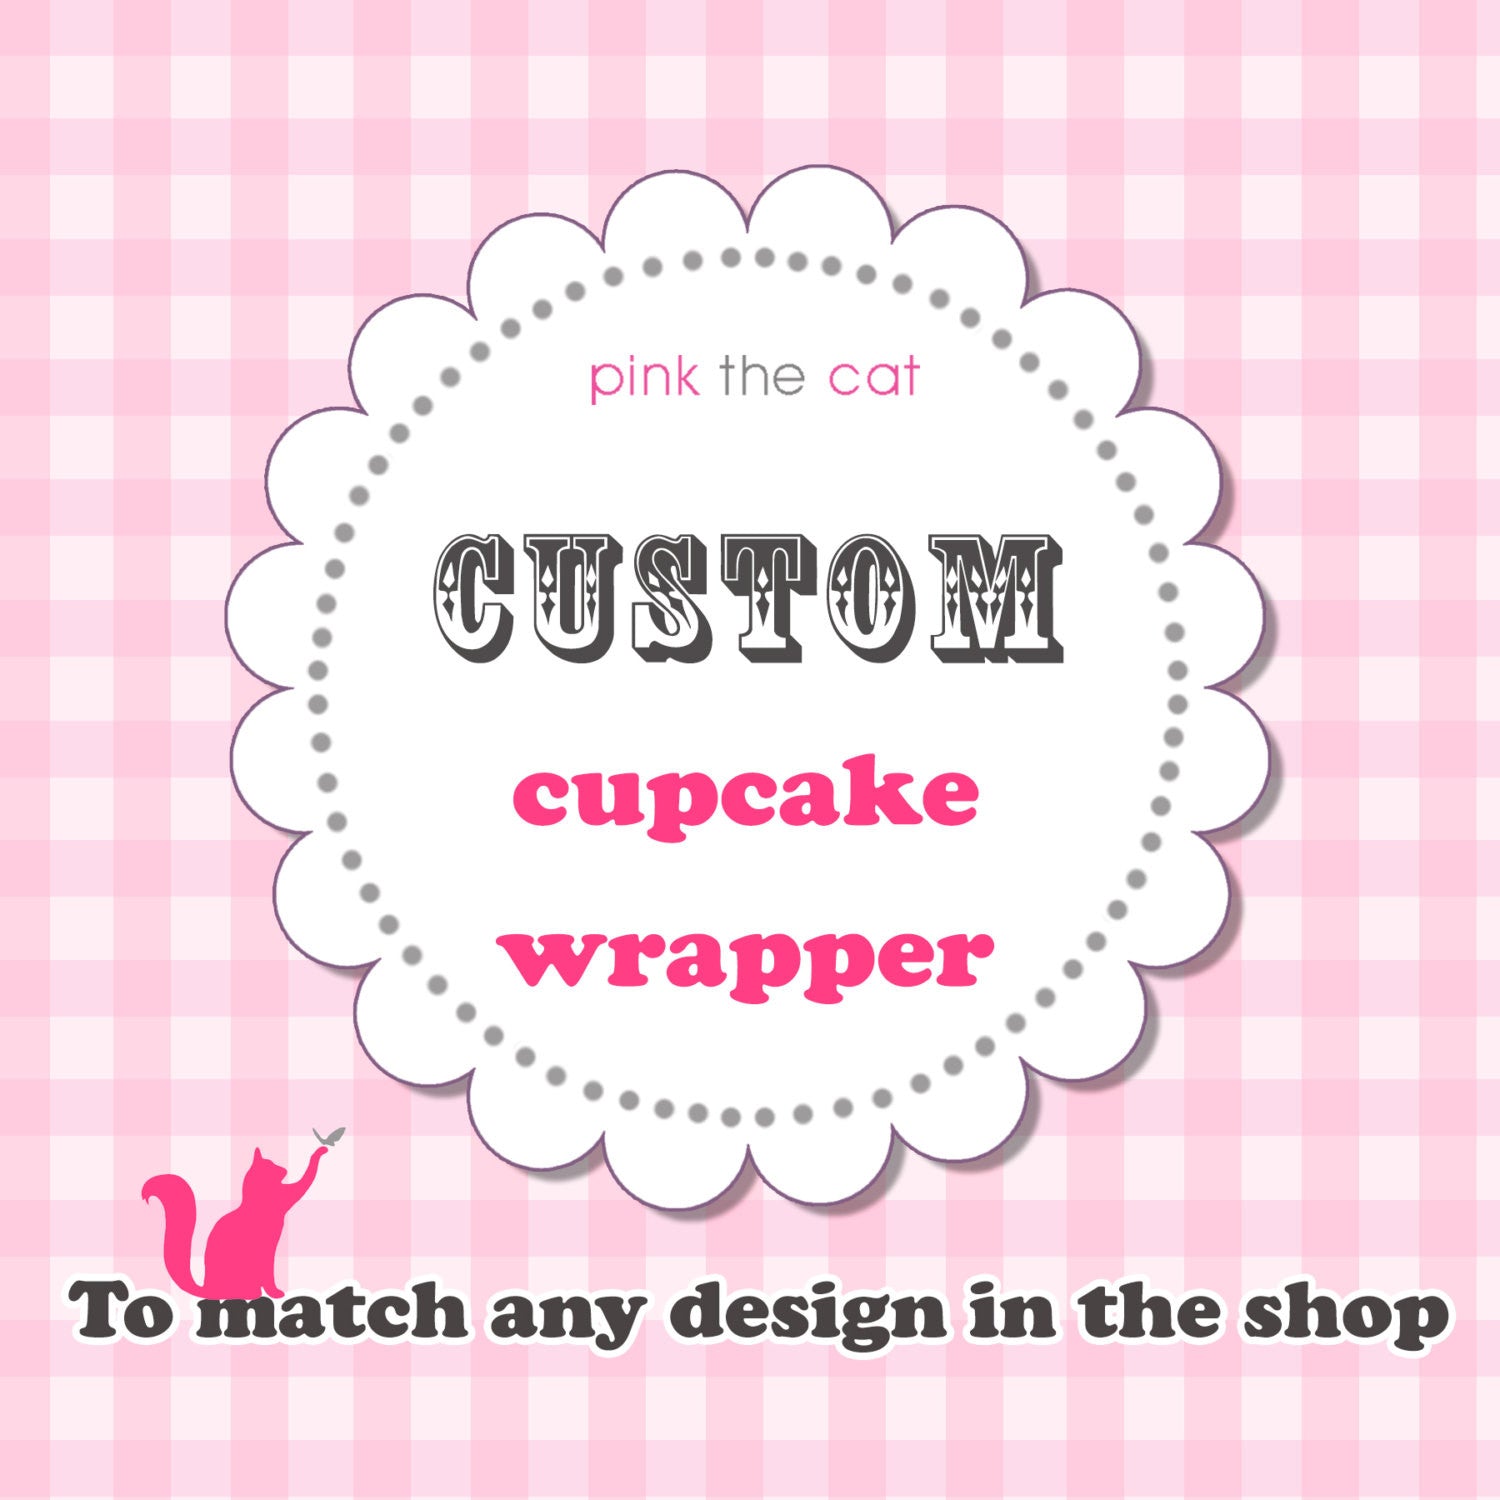 cupcake wrapper